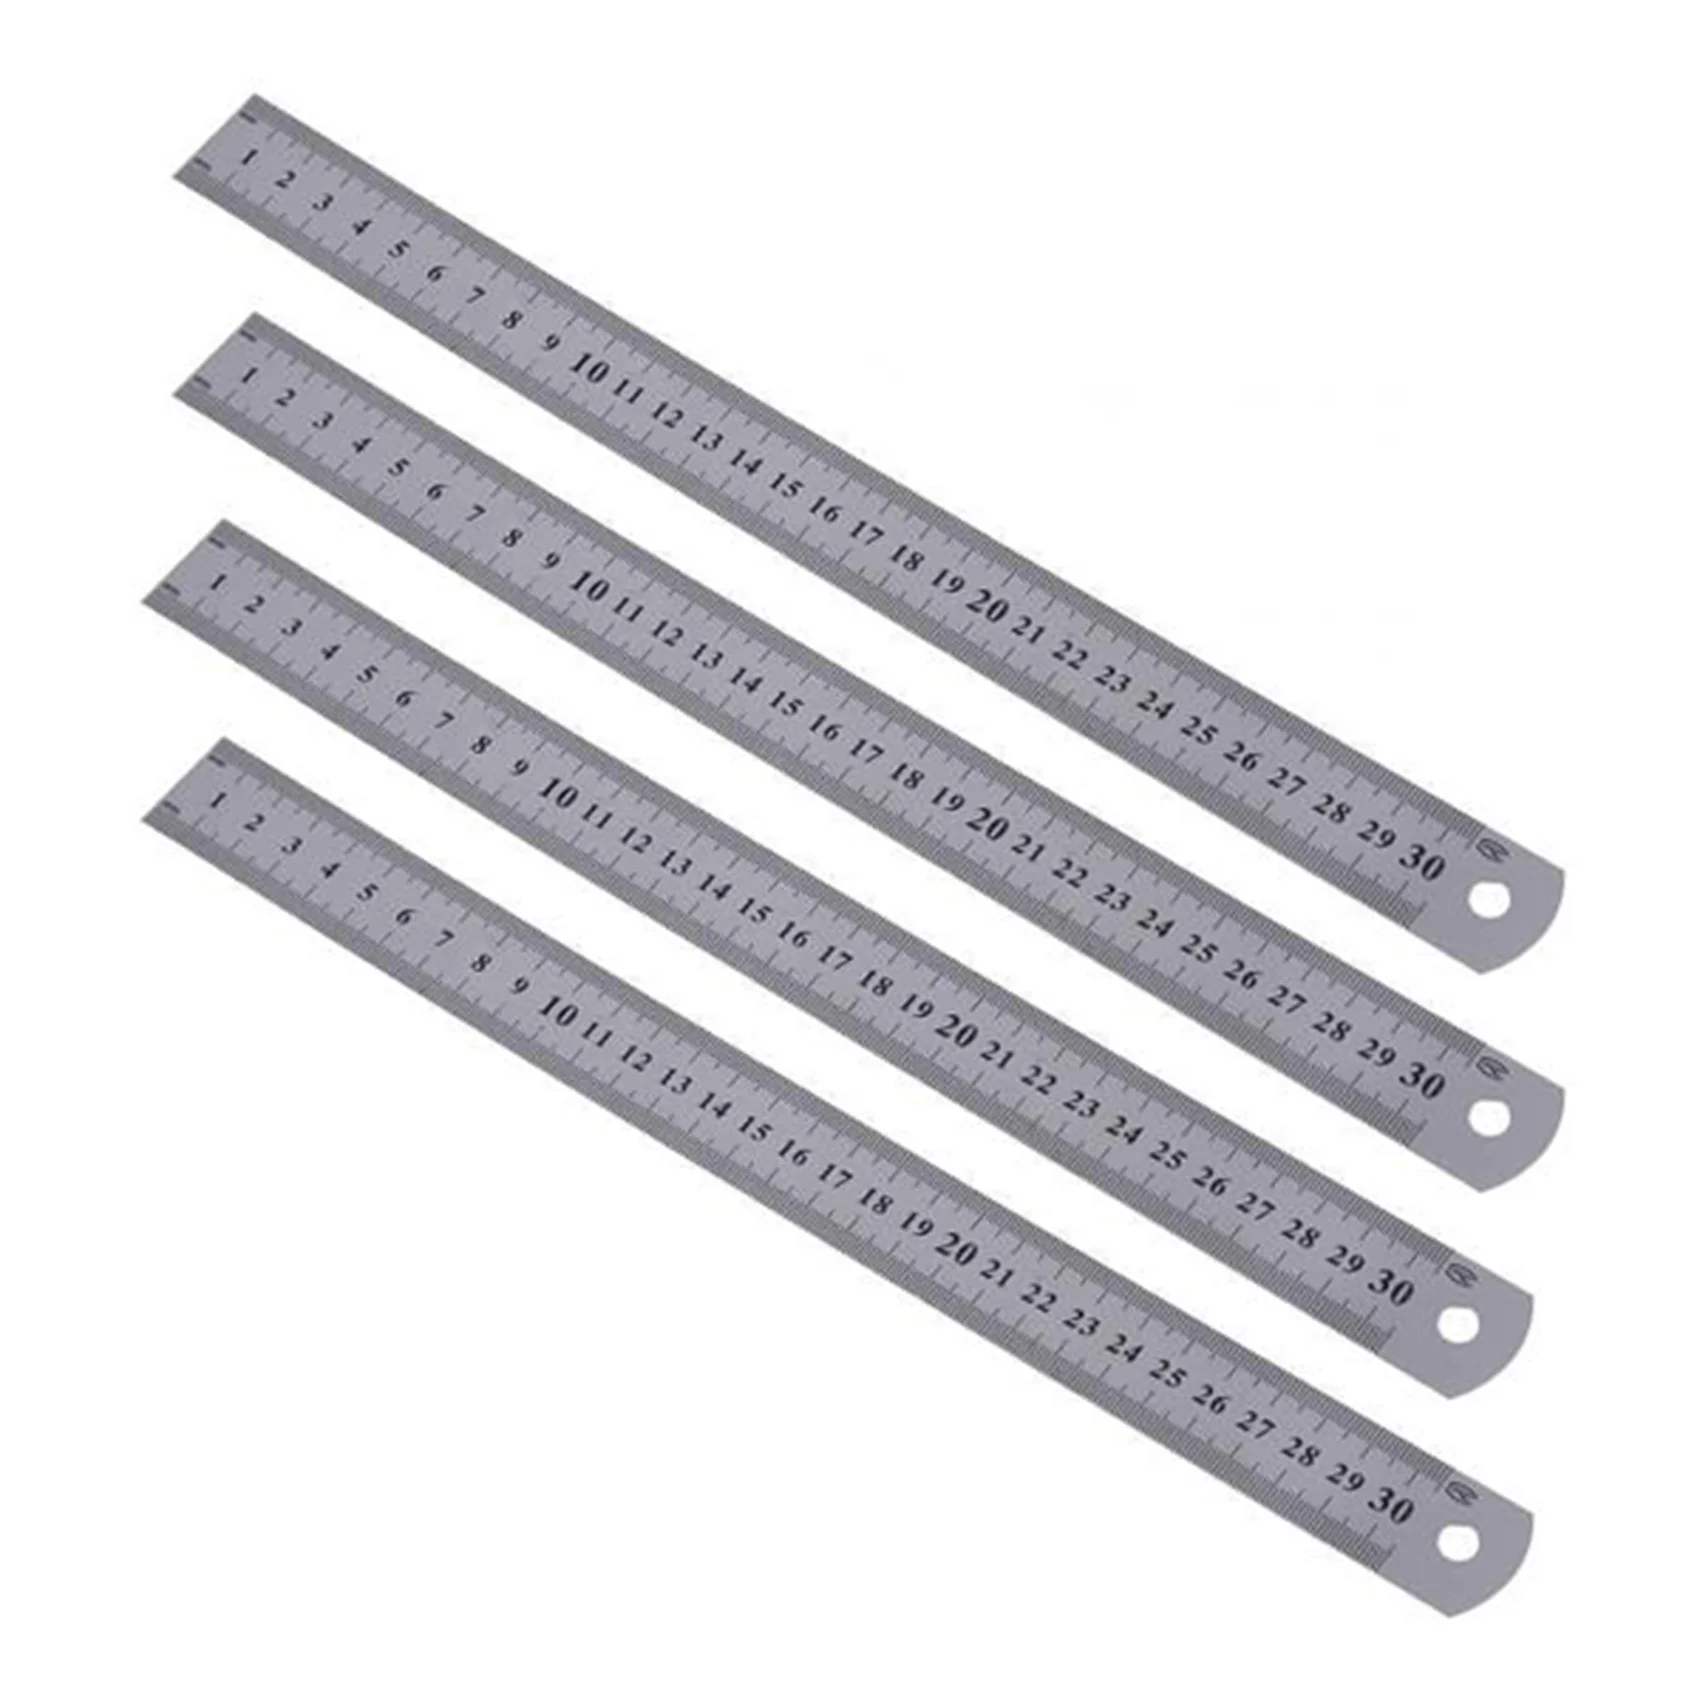 

4X Stainless Steel Ruler Measure Metric Function 30cm 12Inch